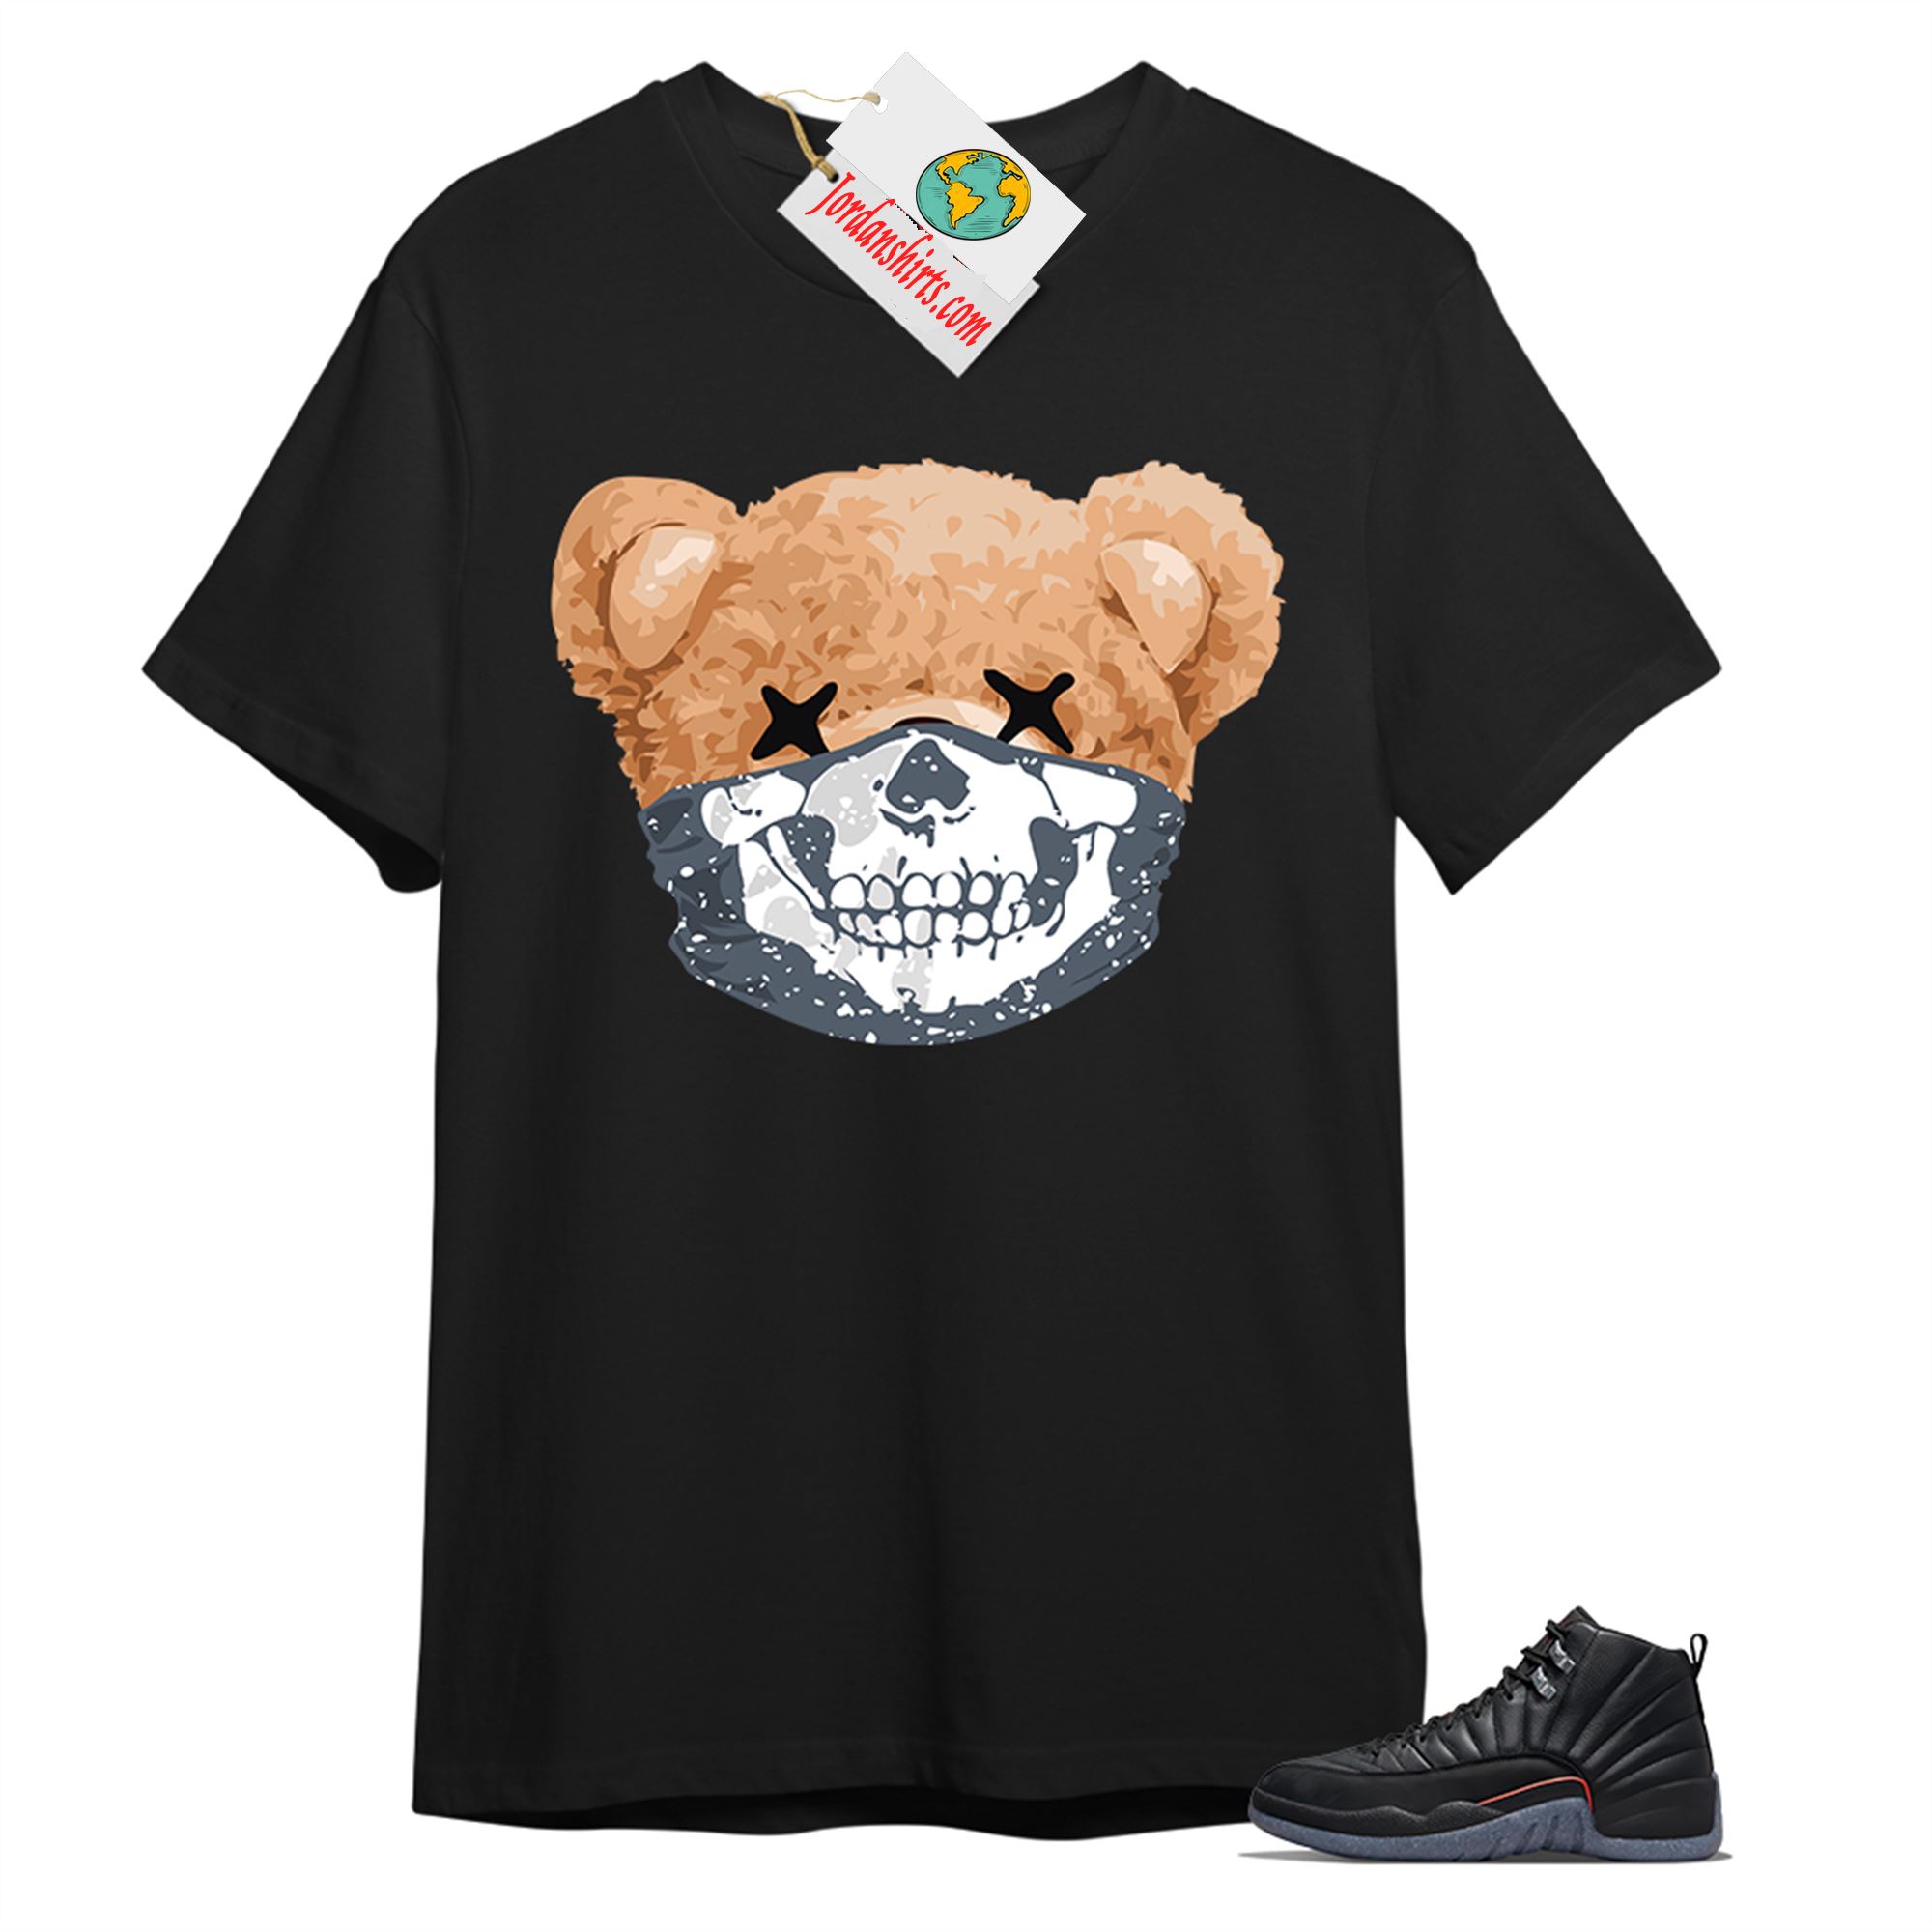 Jordan 12 Shirt, Teddy Bear Skull Bandana Black T-shirt Air Jordan 12 Utility Grind 12s Size Up To 5xl